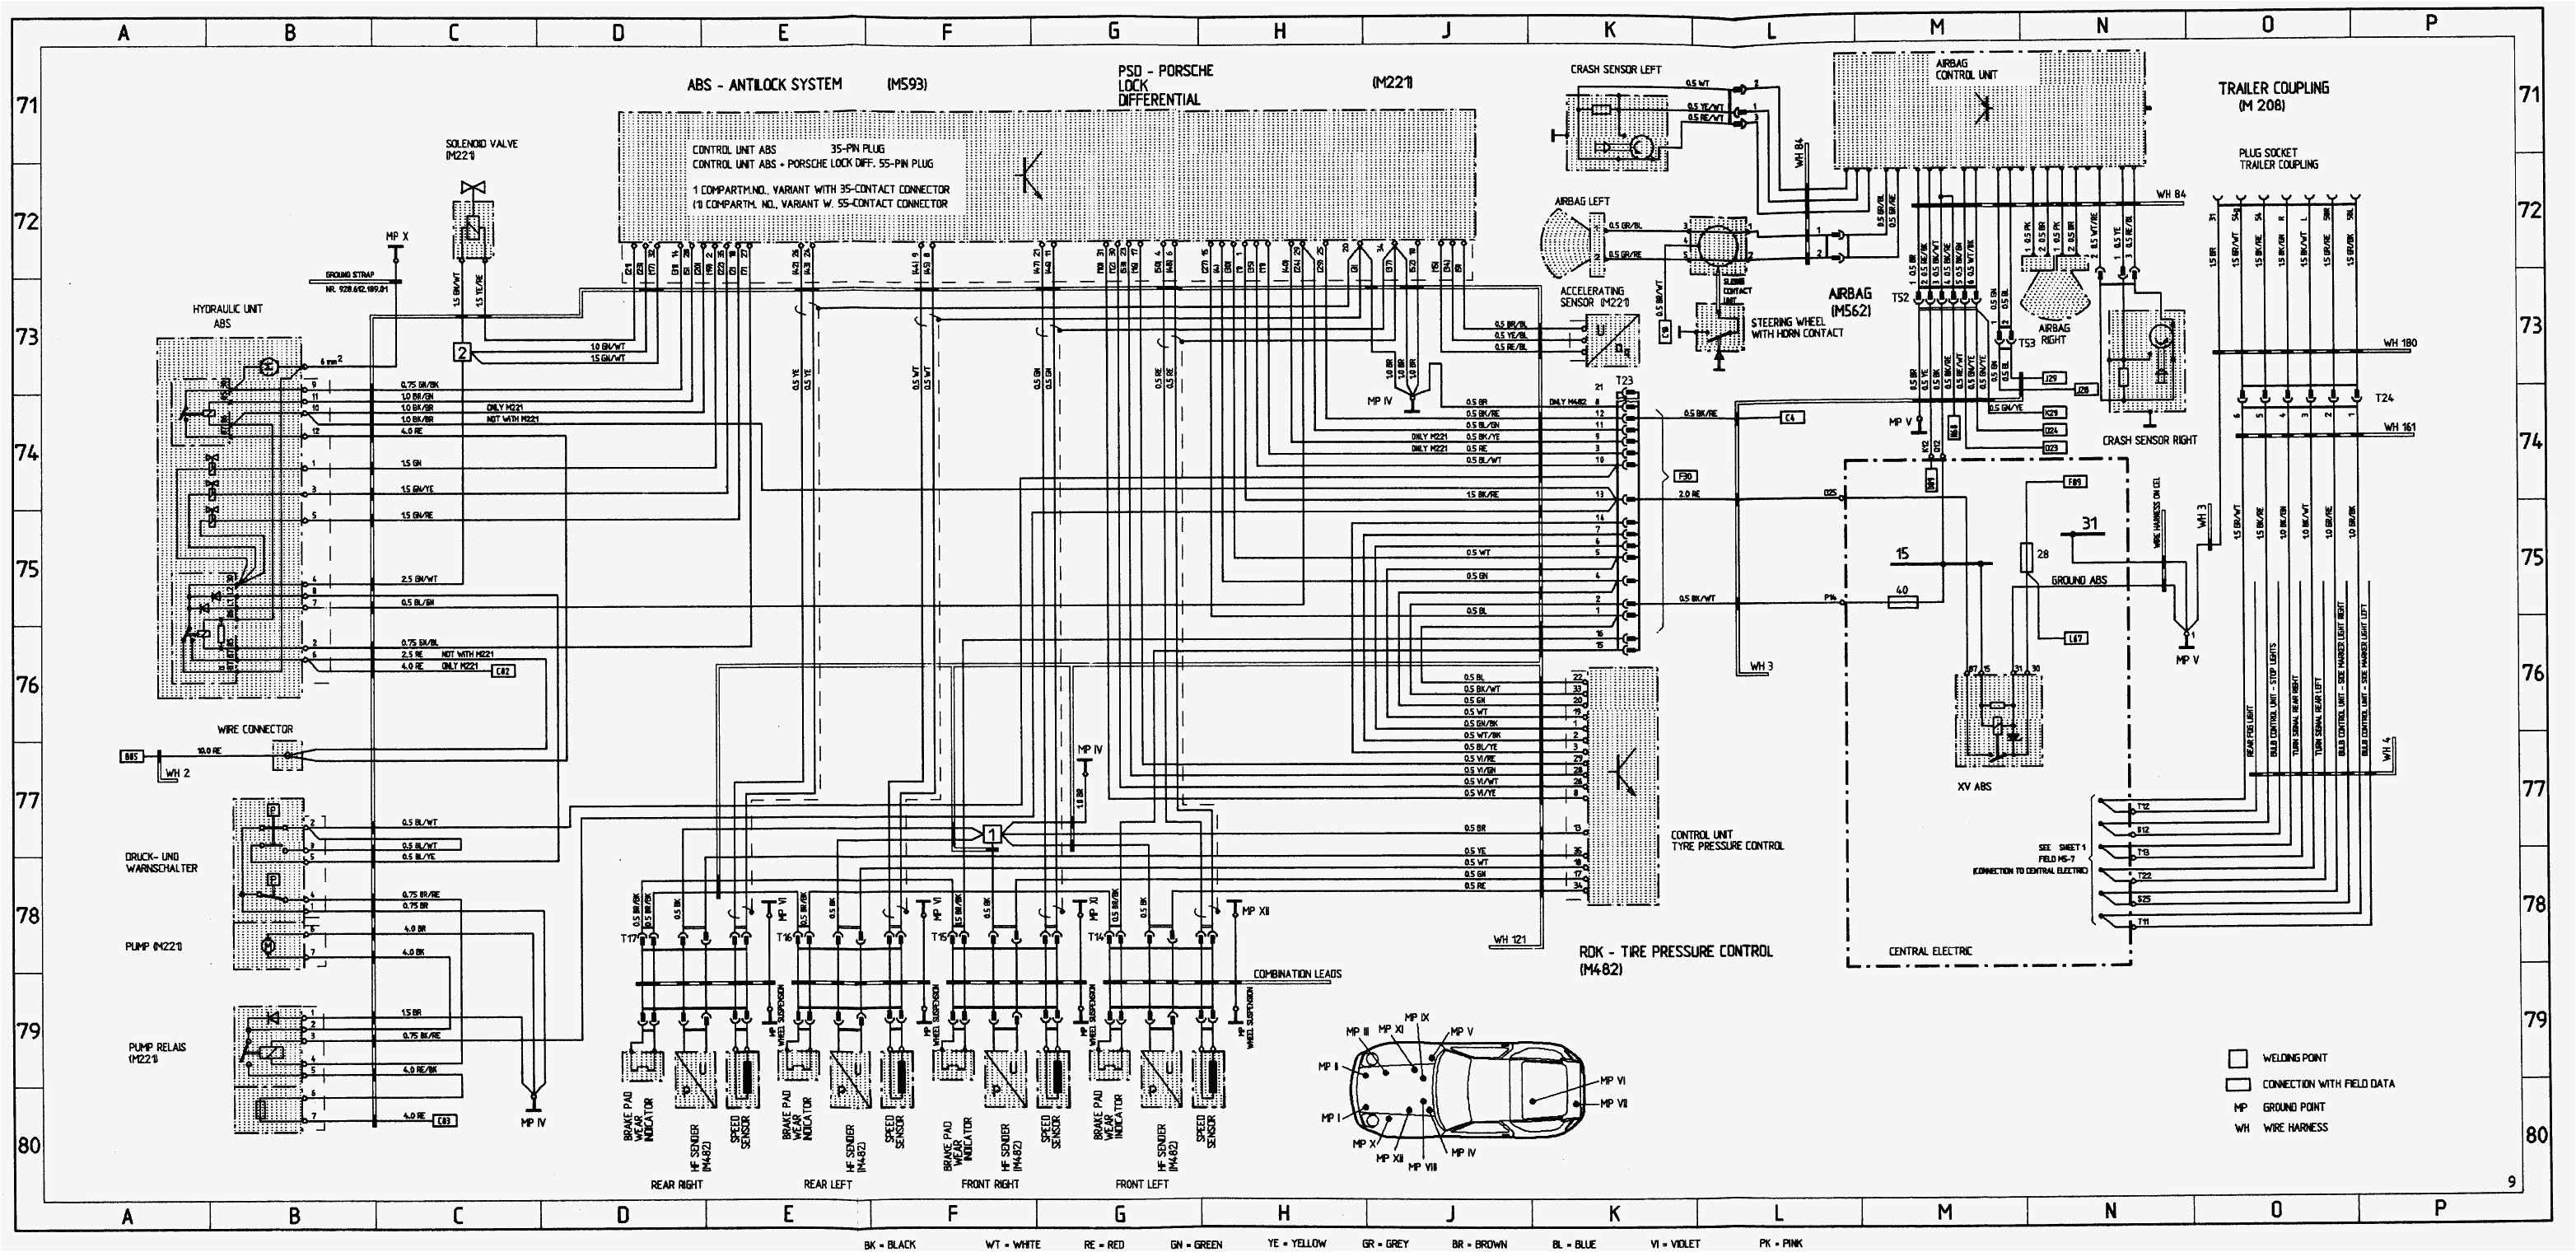 bmw m50 wiring diagram wiring diagram toolbox wiring diagram bmw e36 wiring diagrams bmw e36